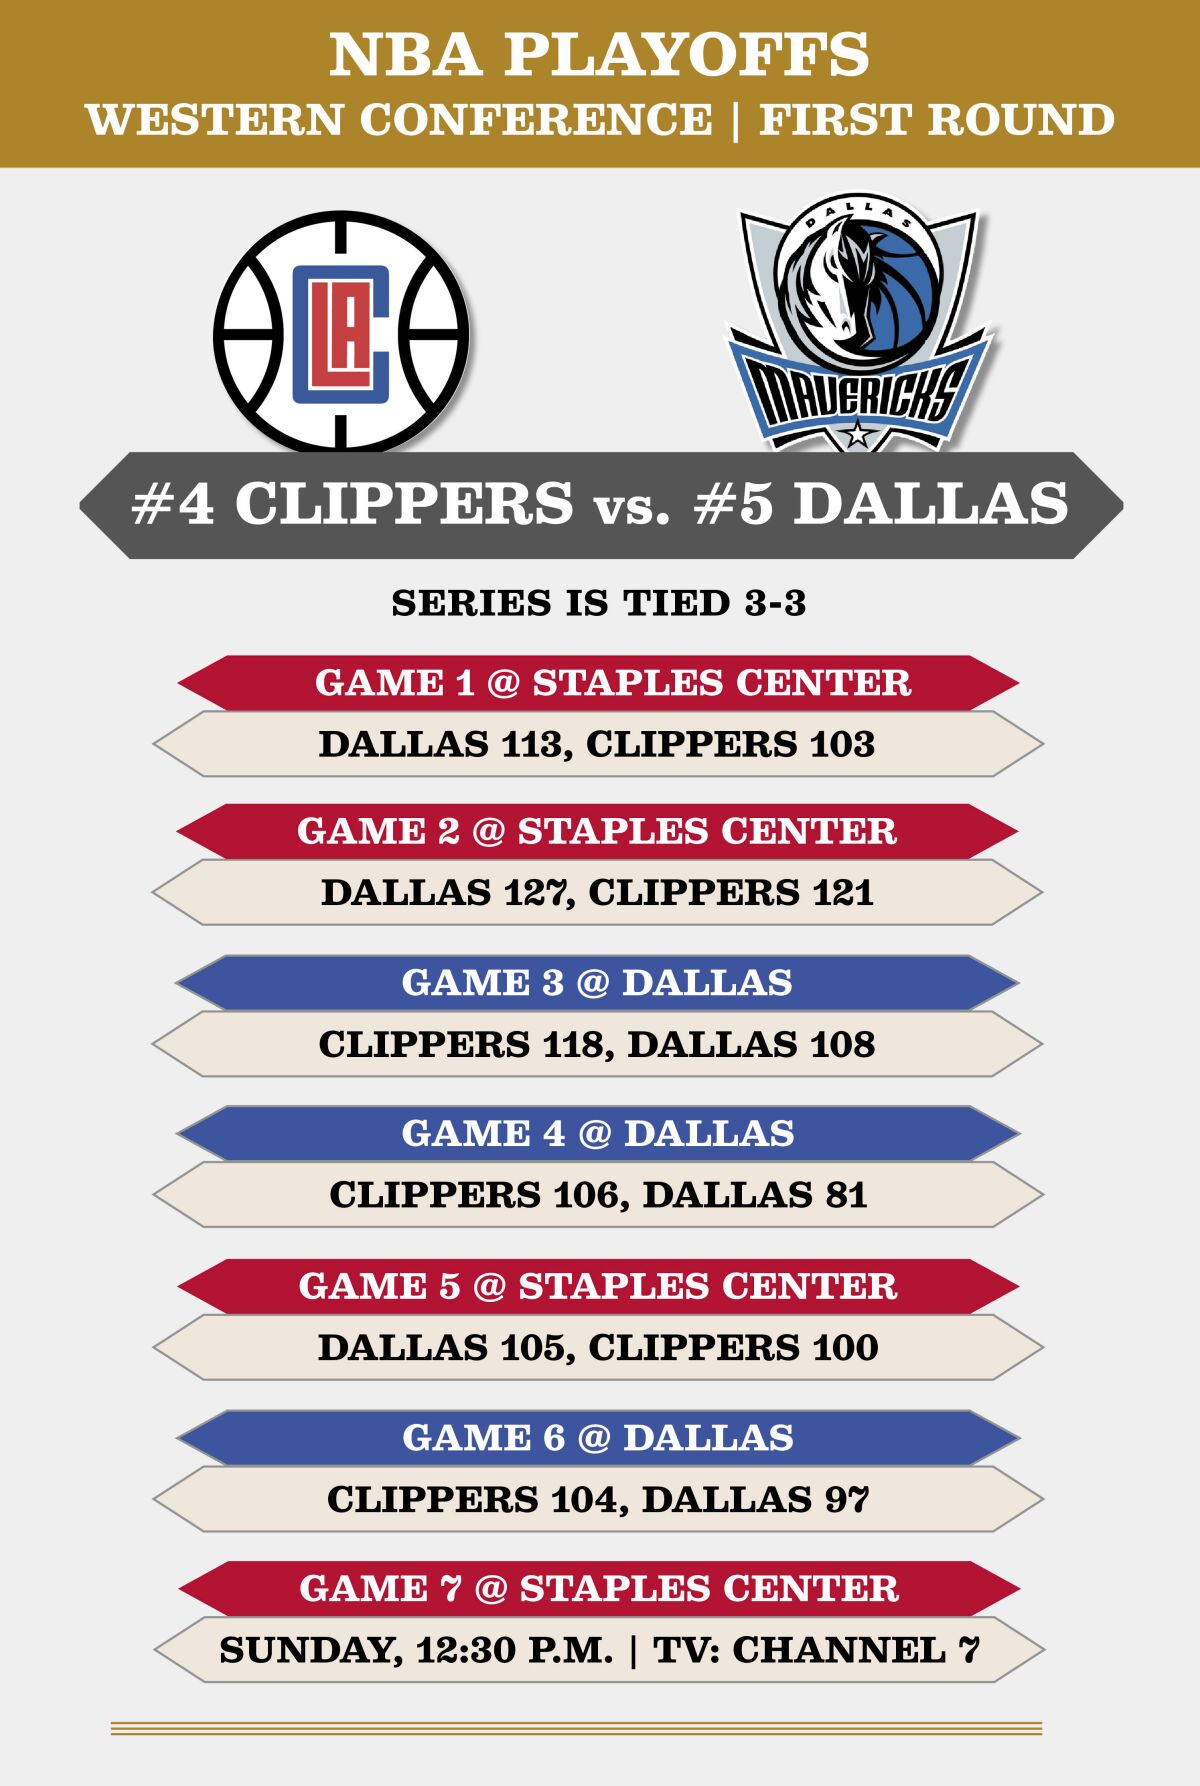 Clippers-Mavericks first-round playoff schedule.